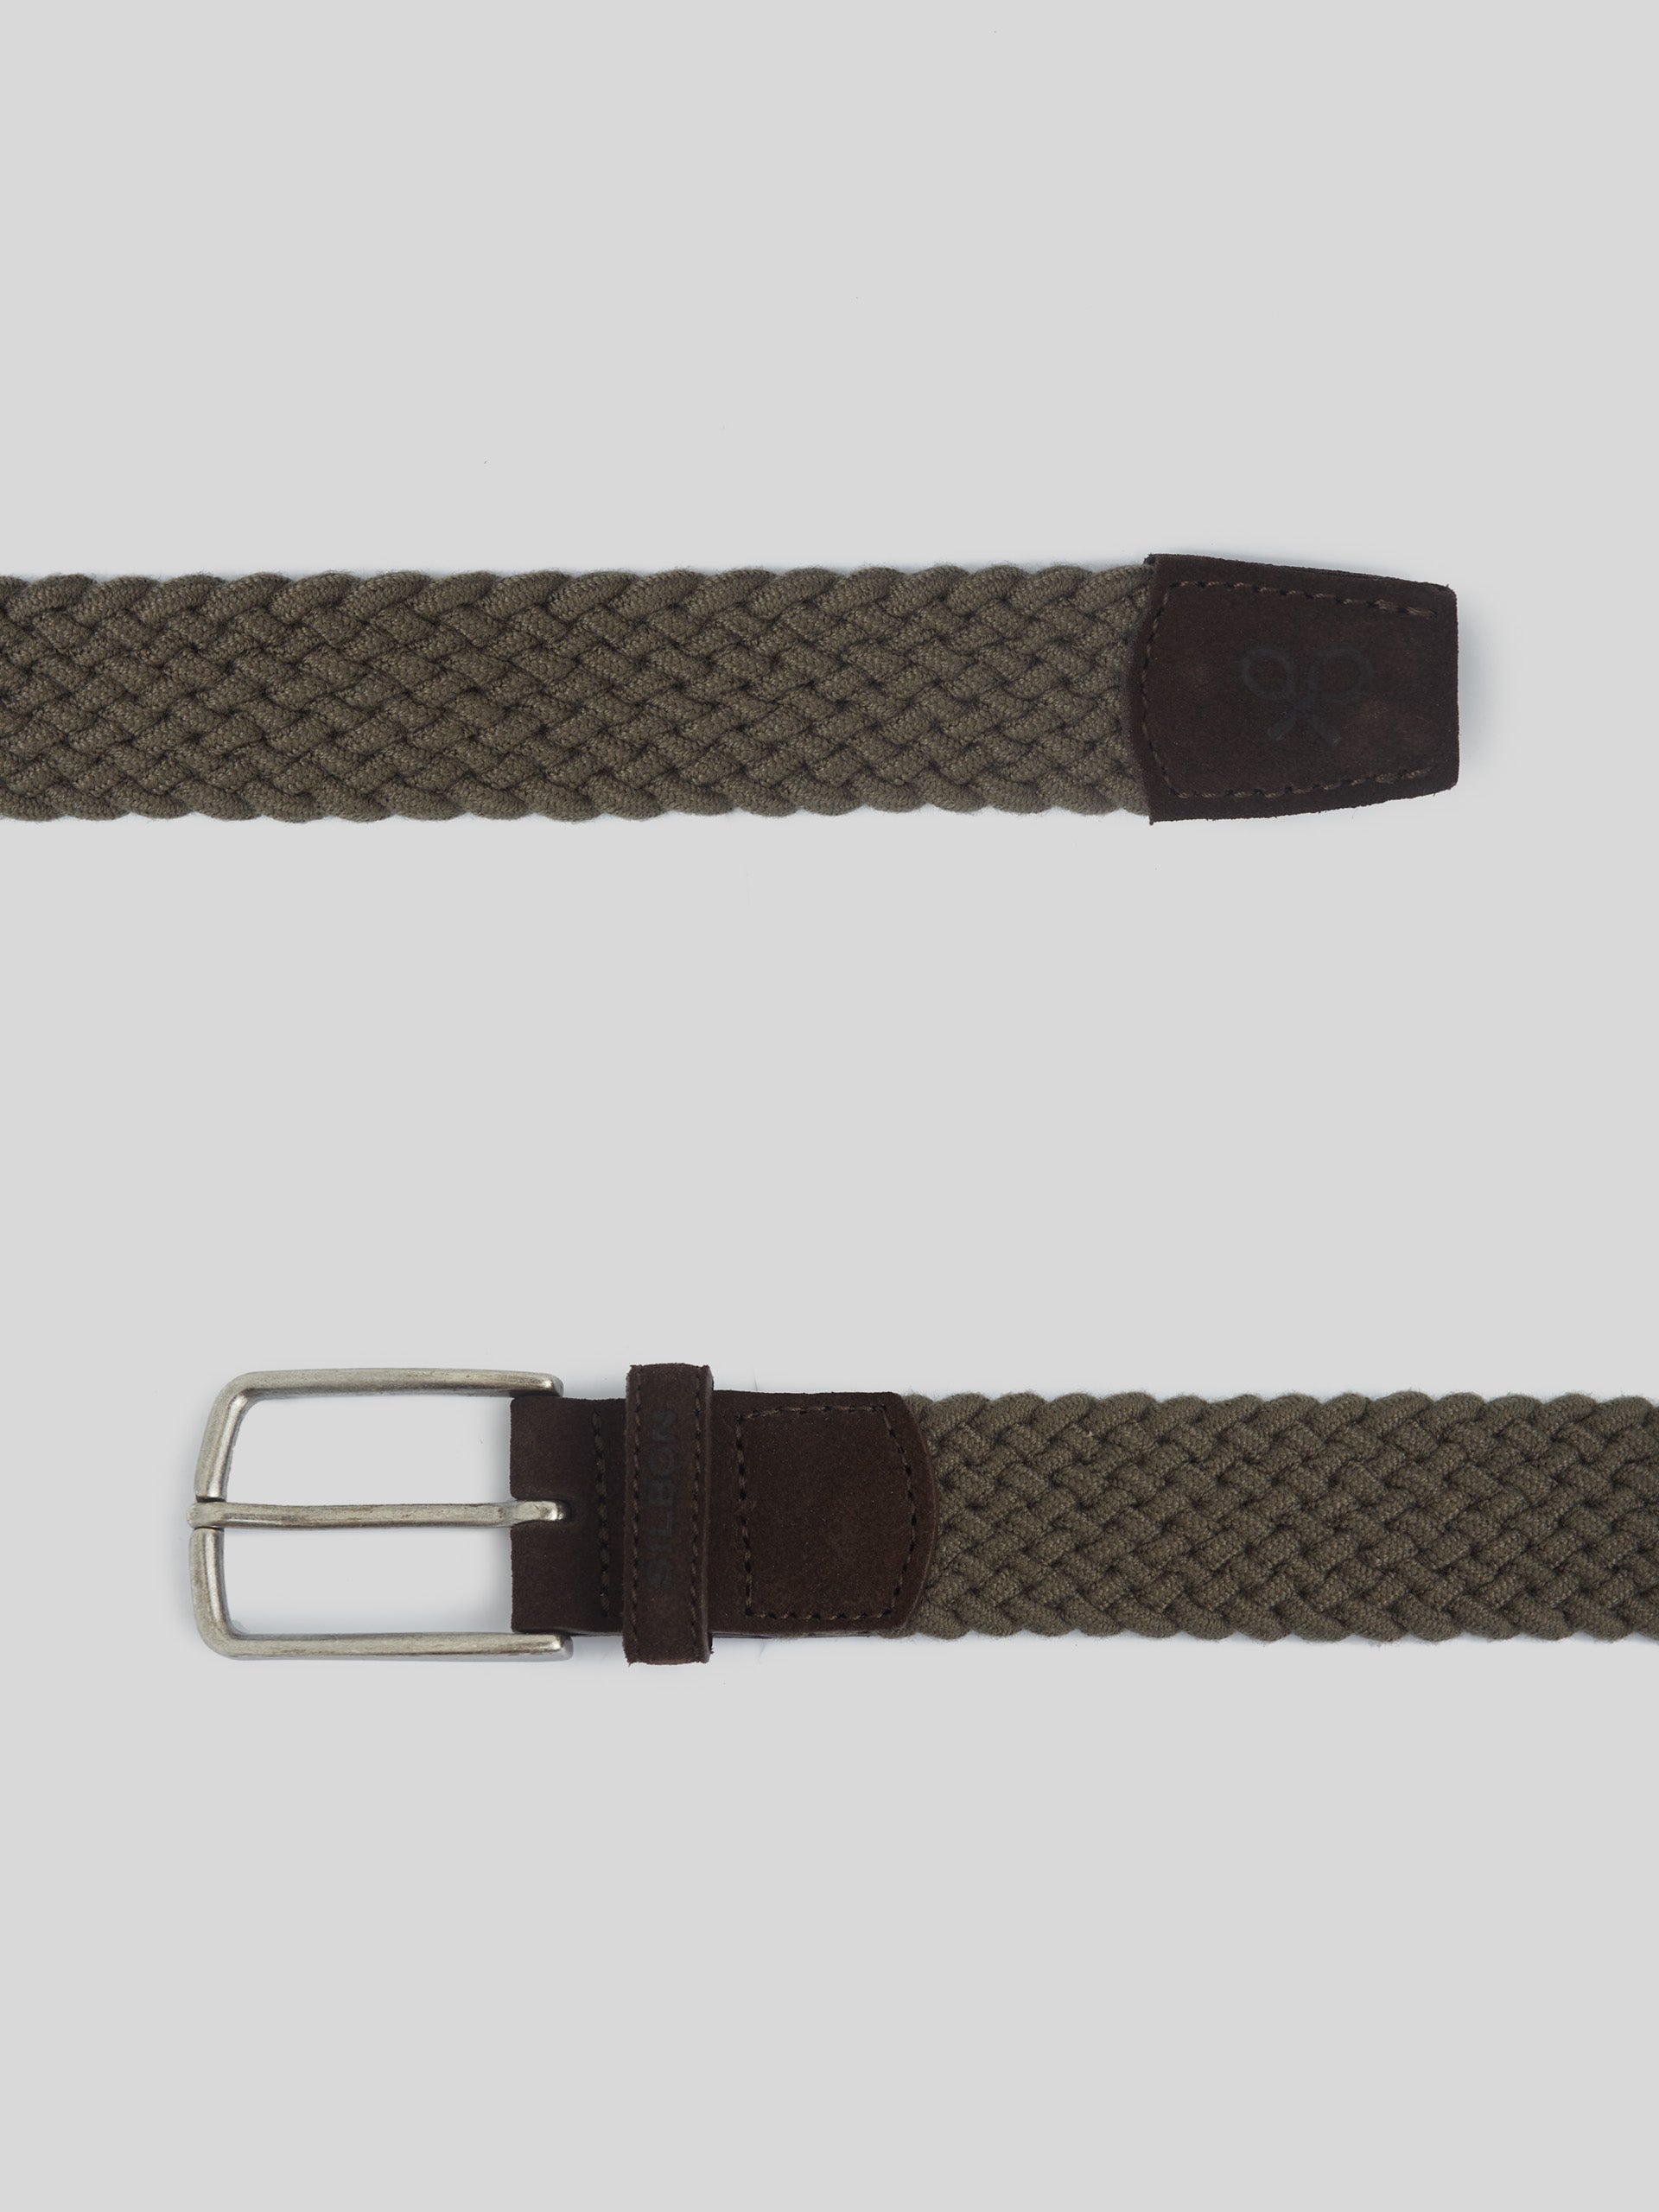 Cinturon elastico trenzado khaki